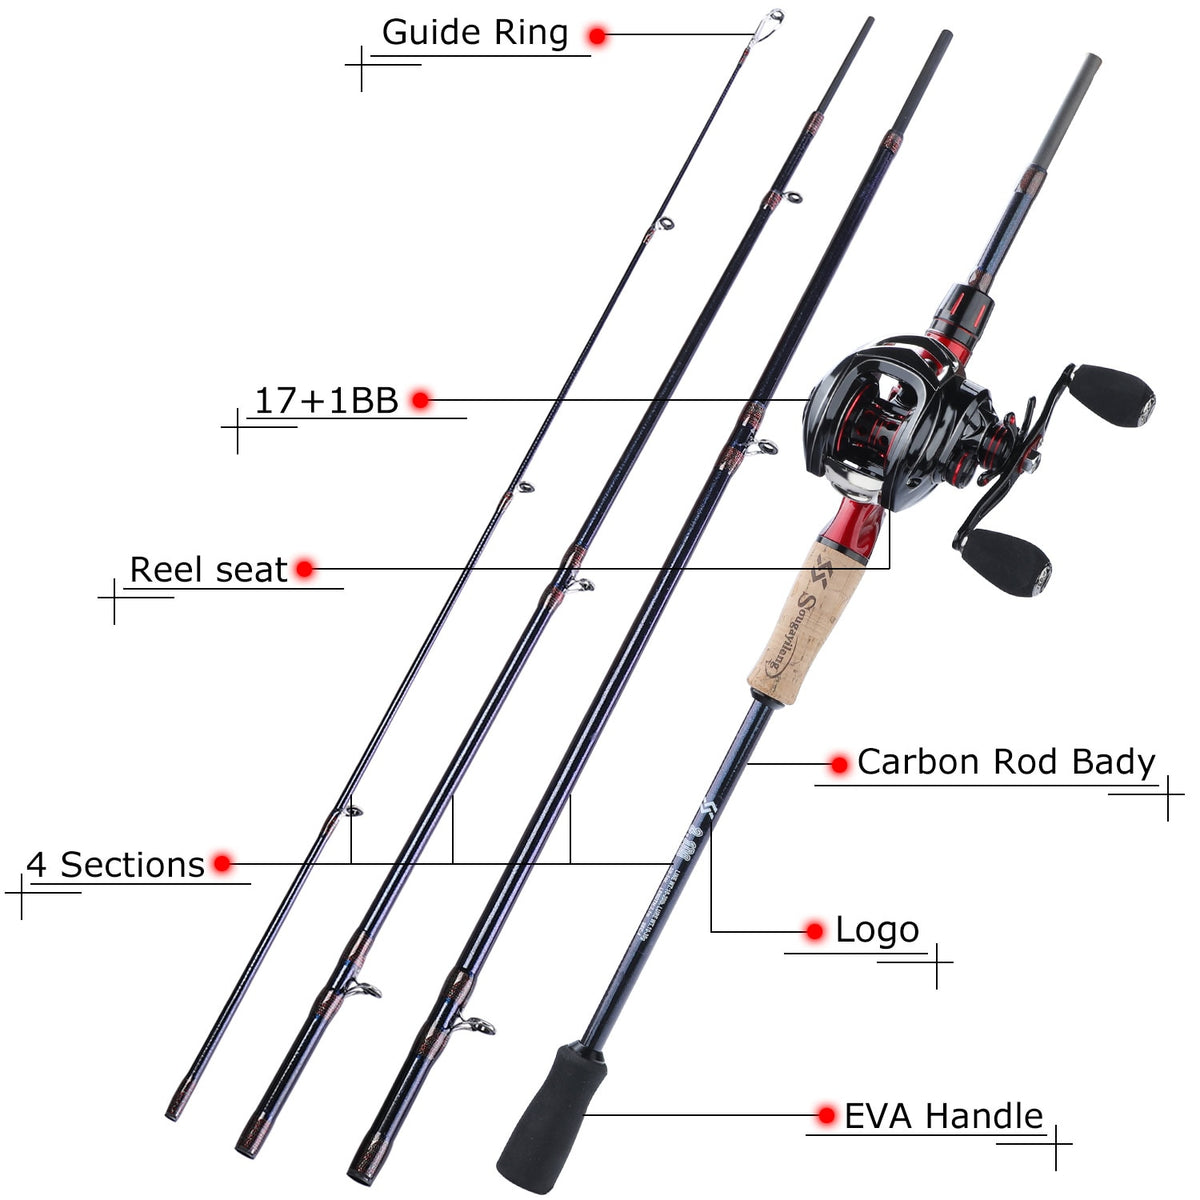 Sougayilang 1.8m/2.1m/2.4m Portable 4 Sections 24 Ton Carbon Casting  Fishing Rod and 11+1BB Baitcasting Reel Fishing Combo Pesca